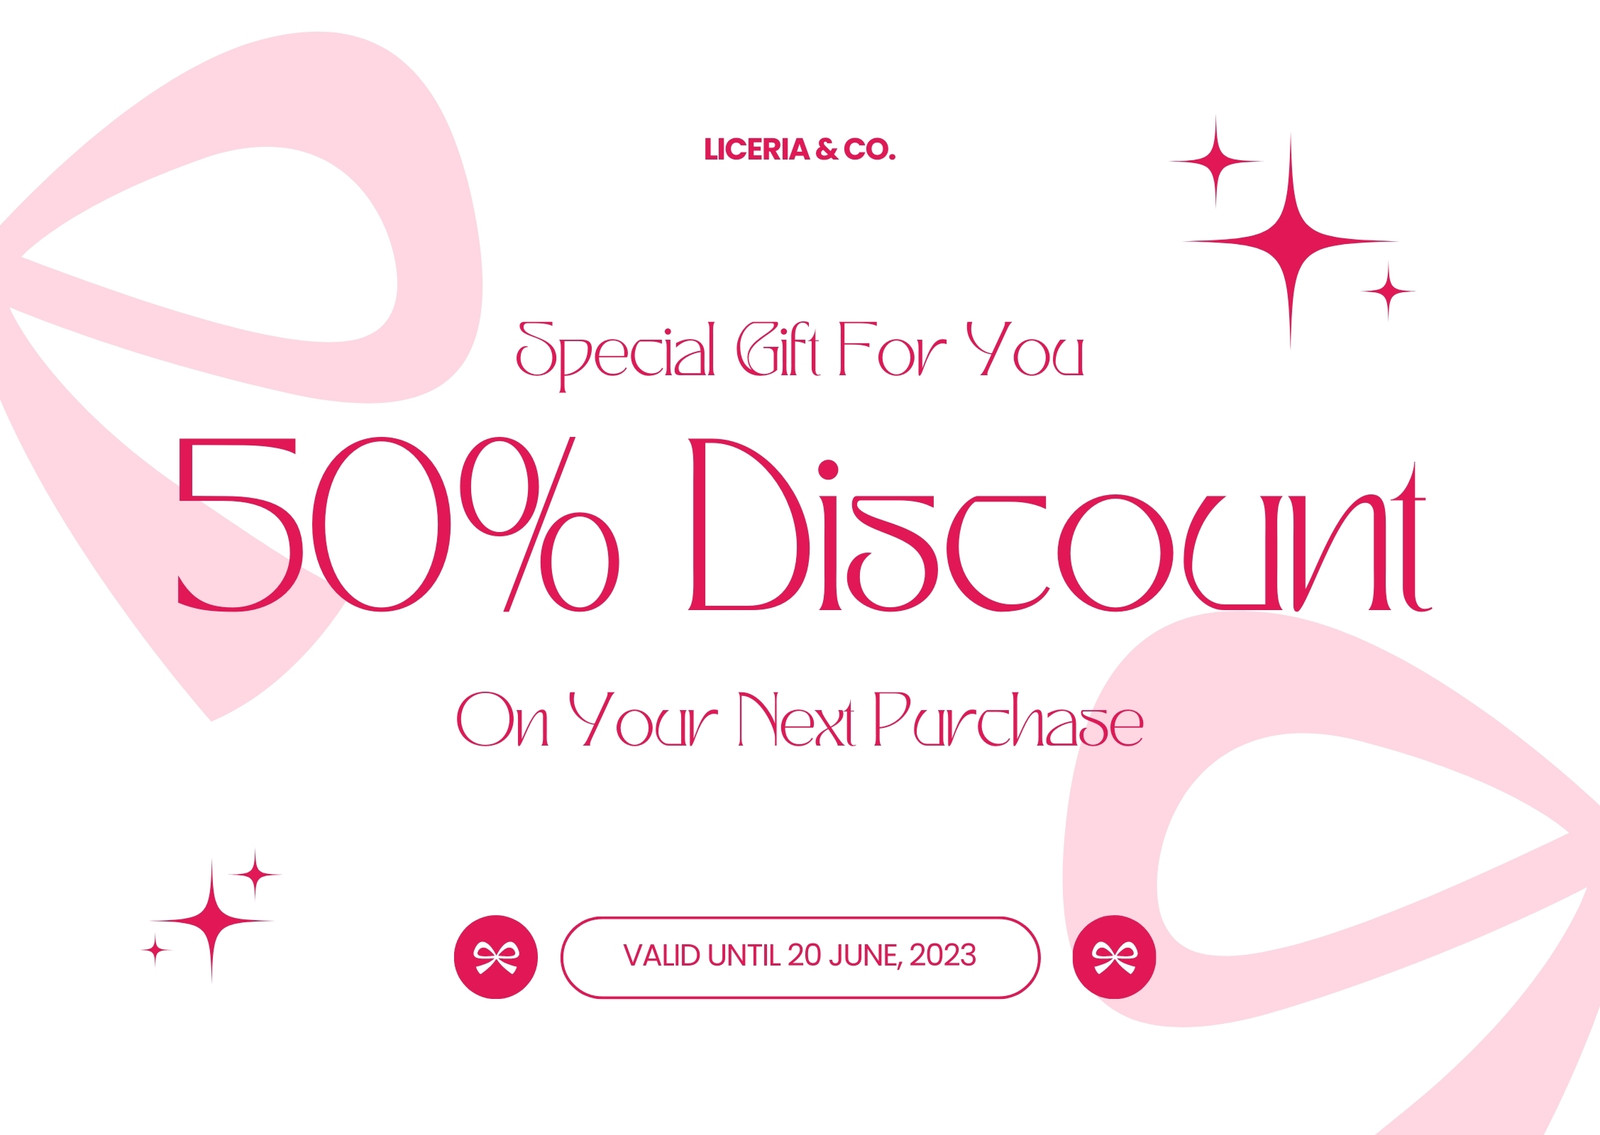 https://marketplace.canva.com/EAFifuowO0Q/1/0/1600w/canva-white-pink-minimalist-50%25-discount-gift-certificate-fJzunMoKAJg.jpg